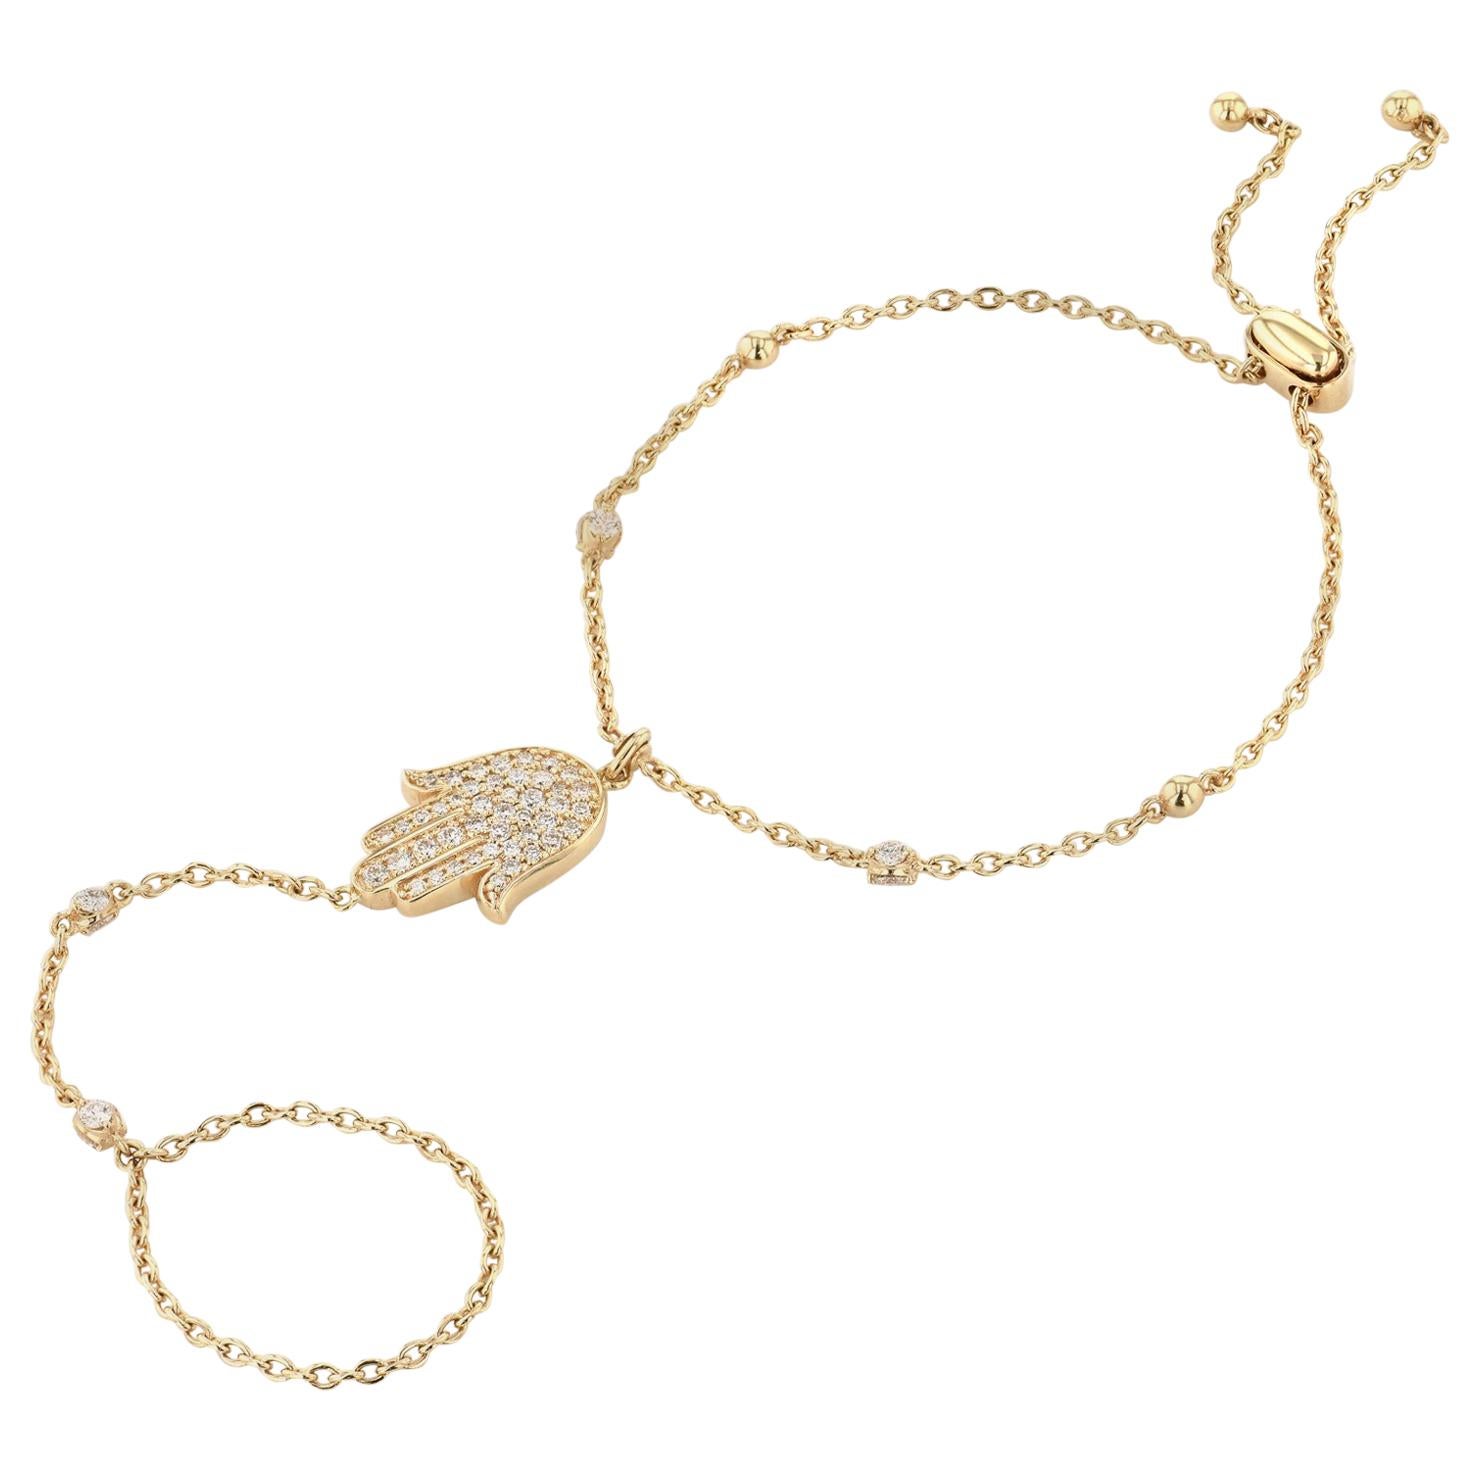 Hamsa Hand 14 karat Yellow Gold and Diamond Chain Bracelet with Ring Attachment